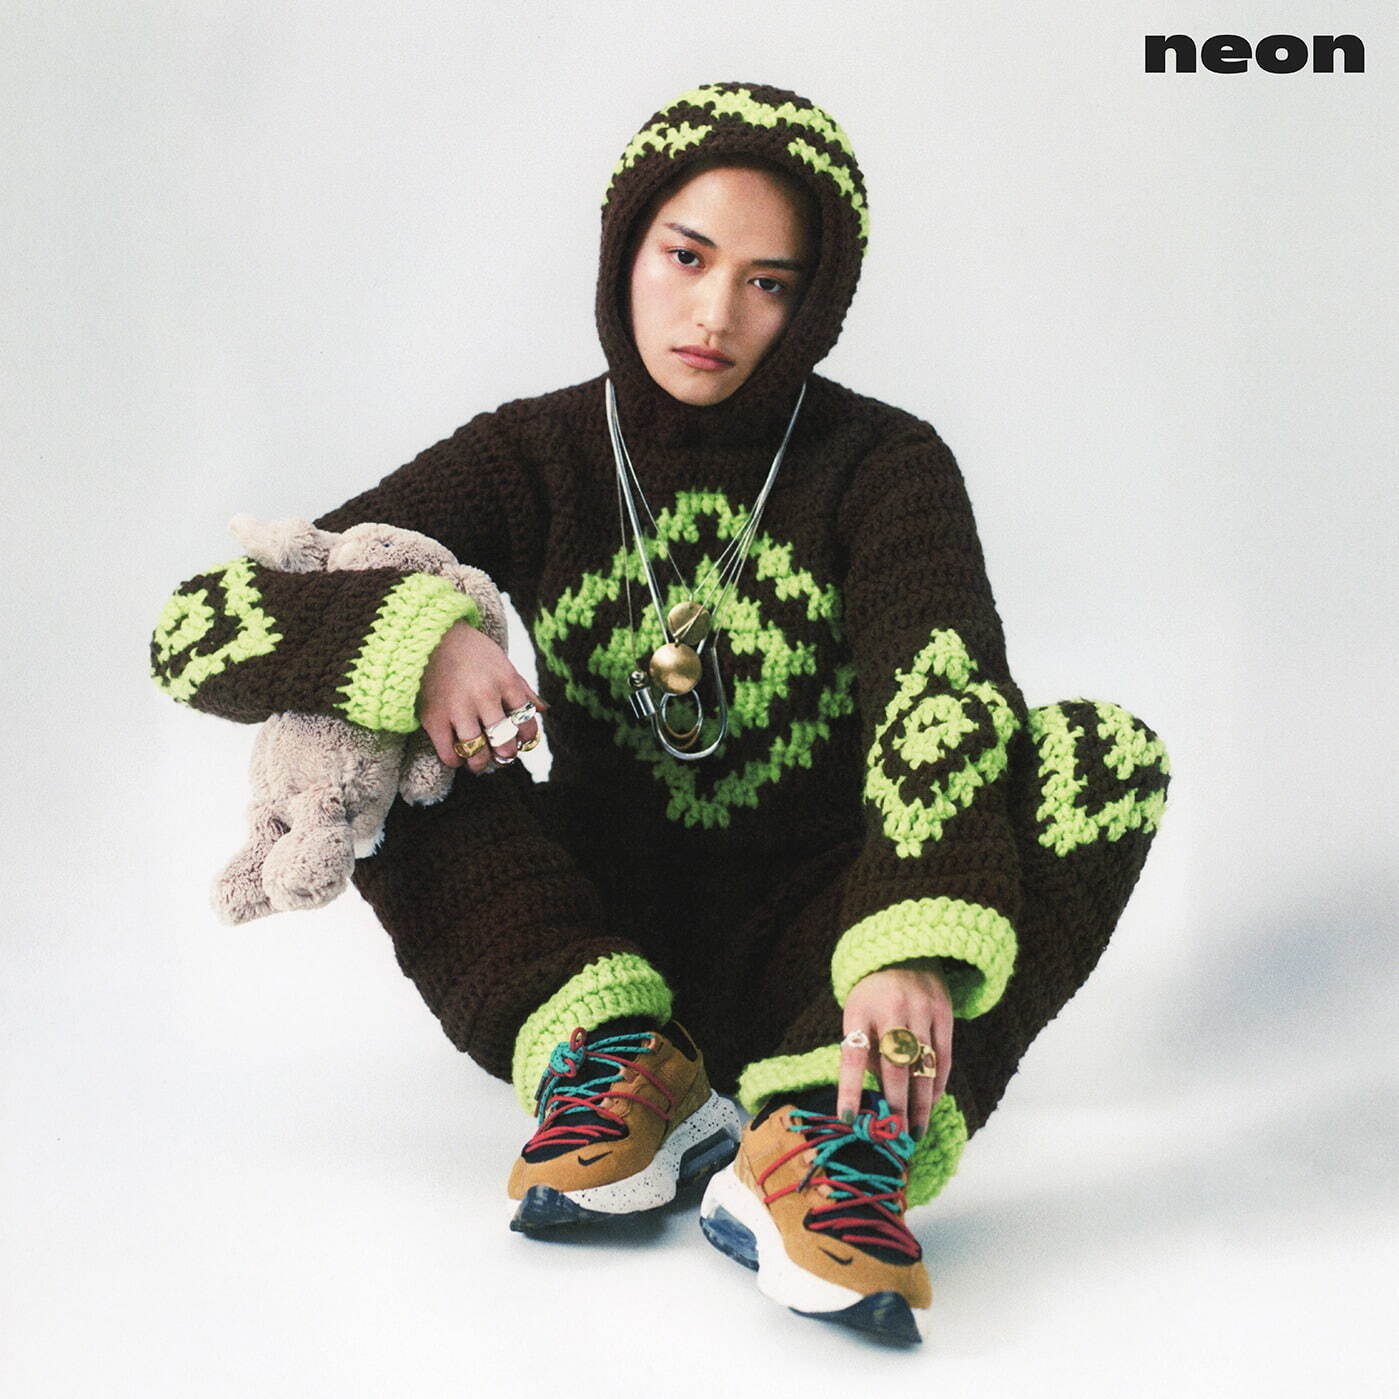 iri 最新アルバム『neon』通常盤(CD) 3,300円、初回限定盤(CD+CD) 3,960円